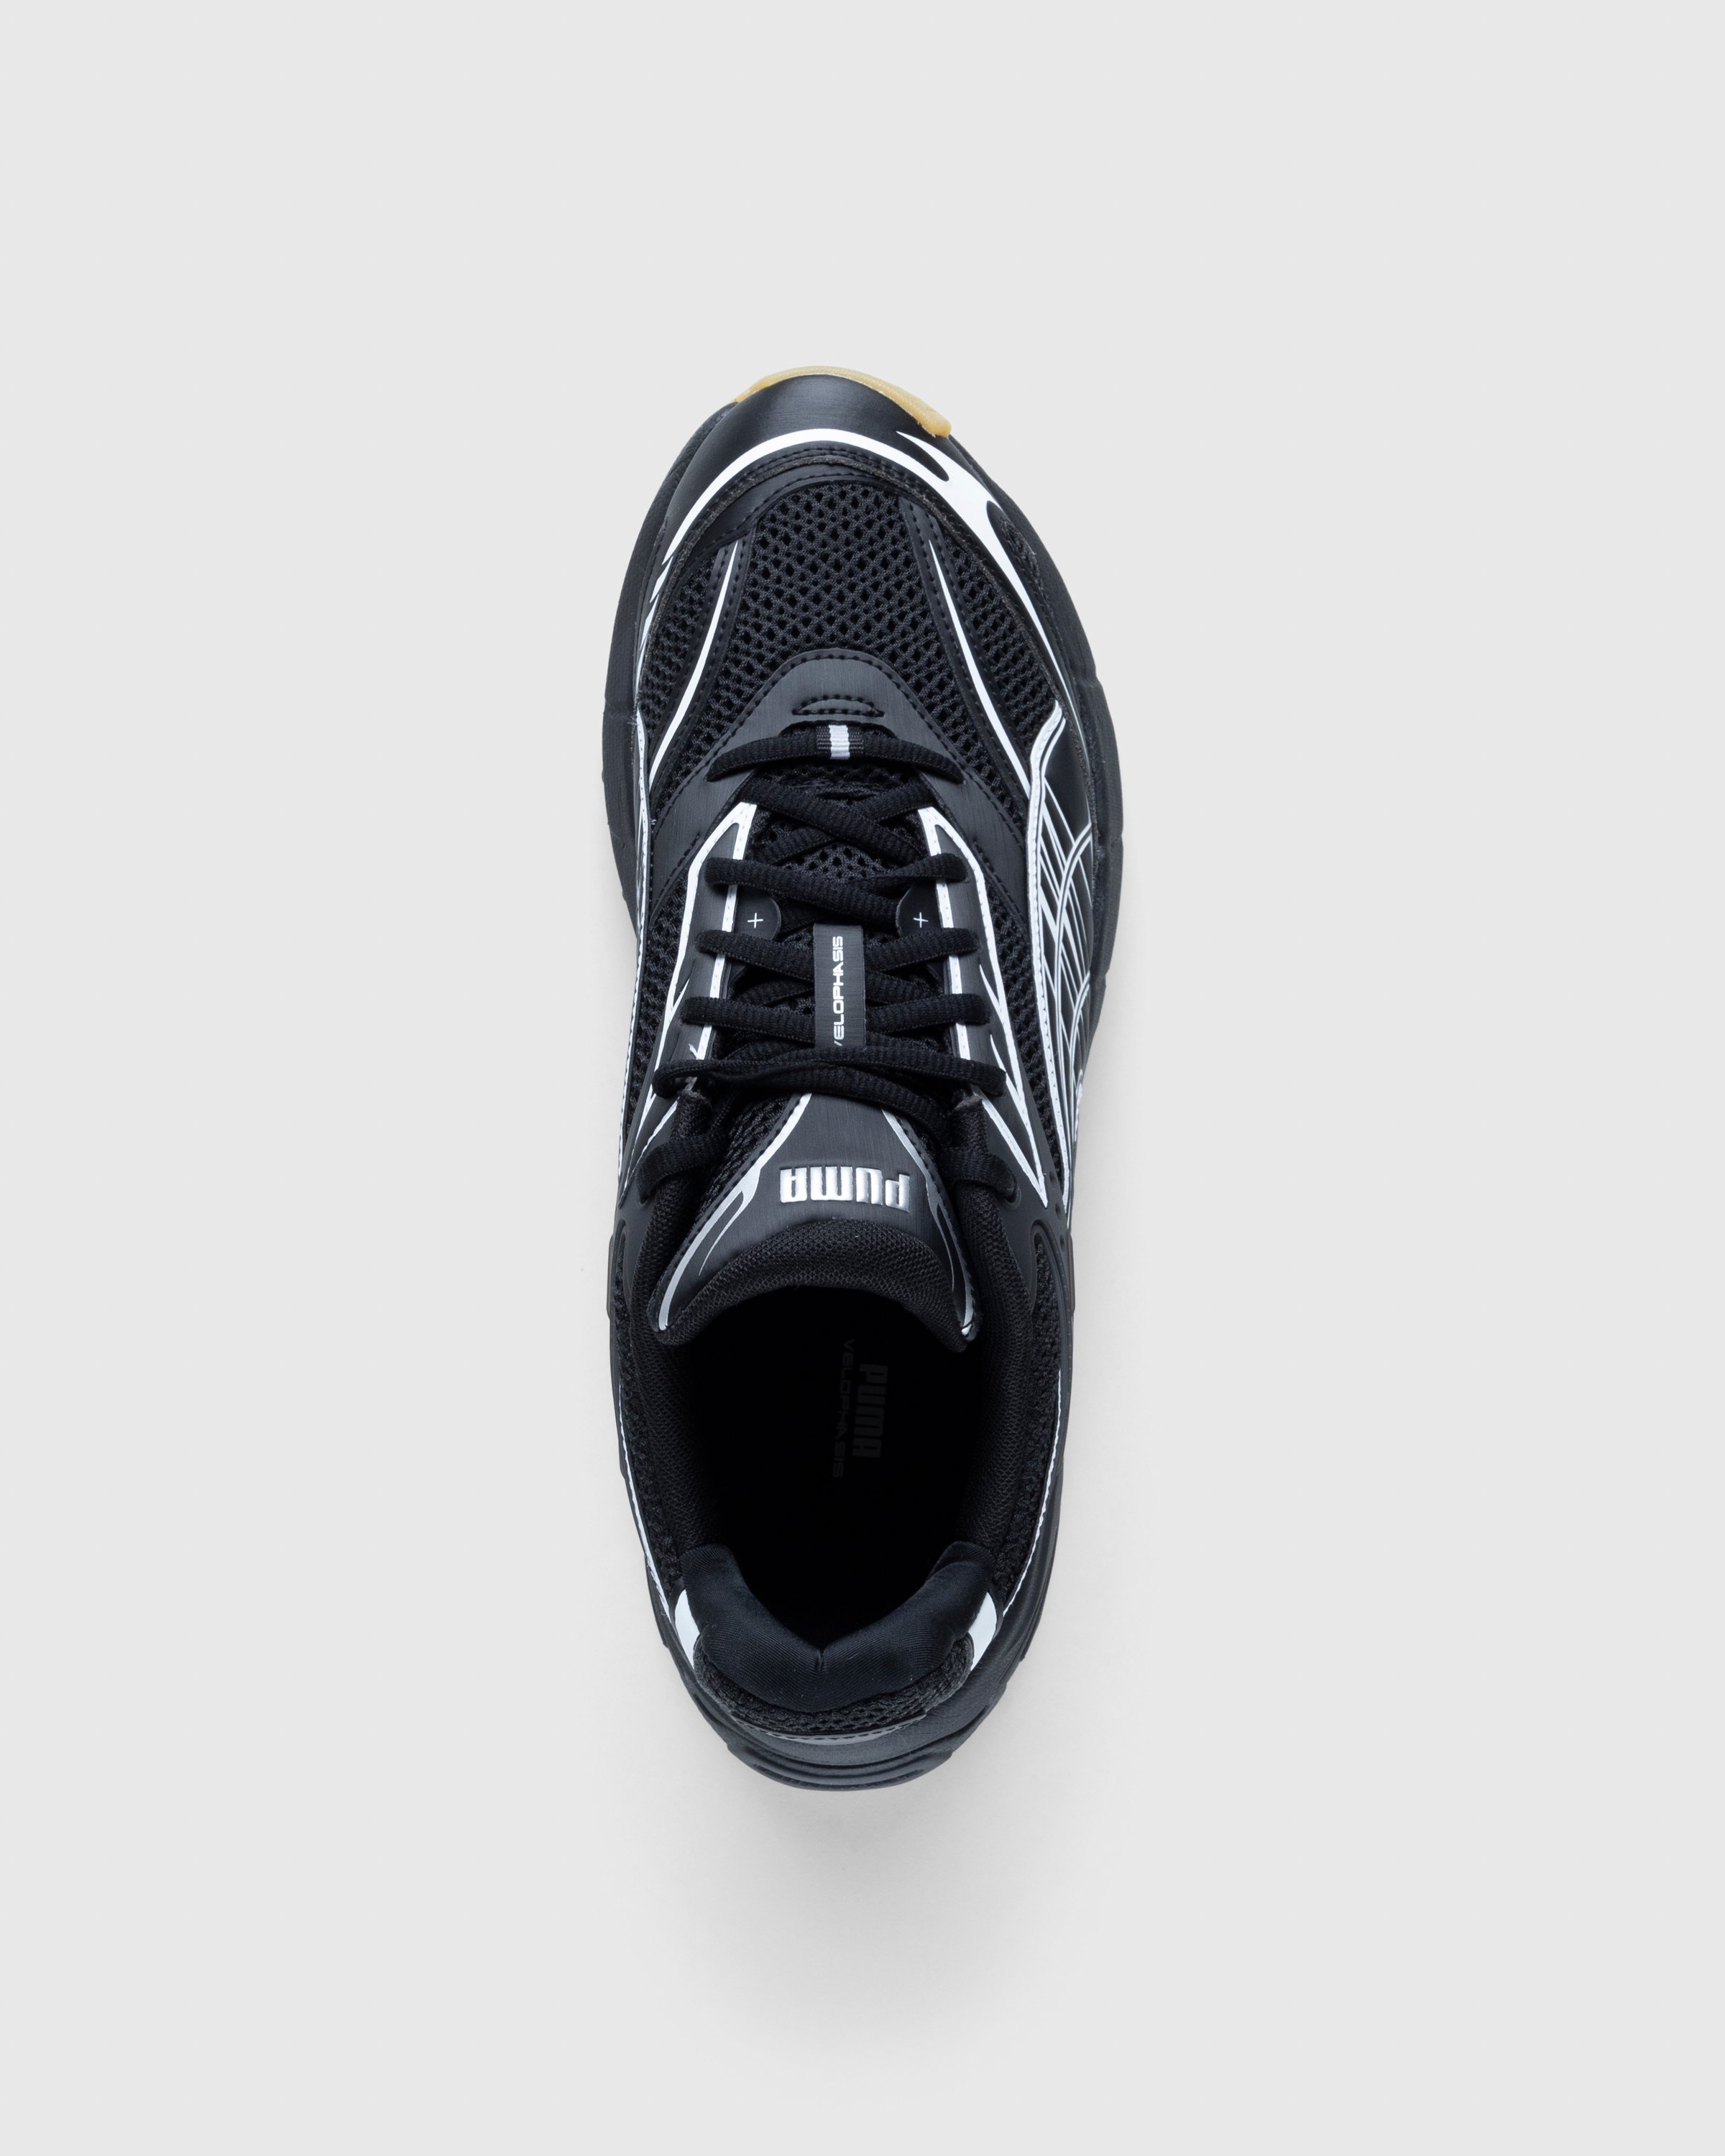 Puma - Velophasis Technisch Black - Footwear - Black - Image 5